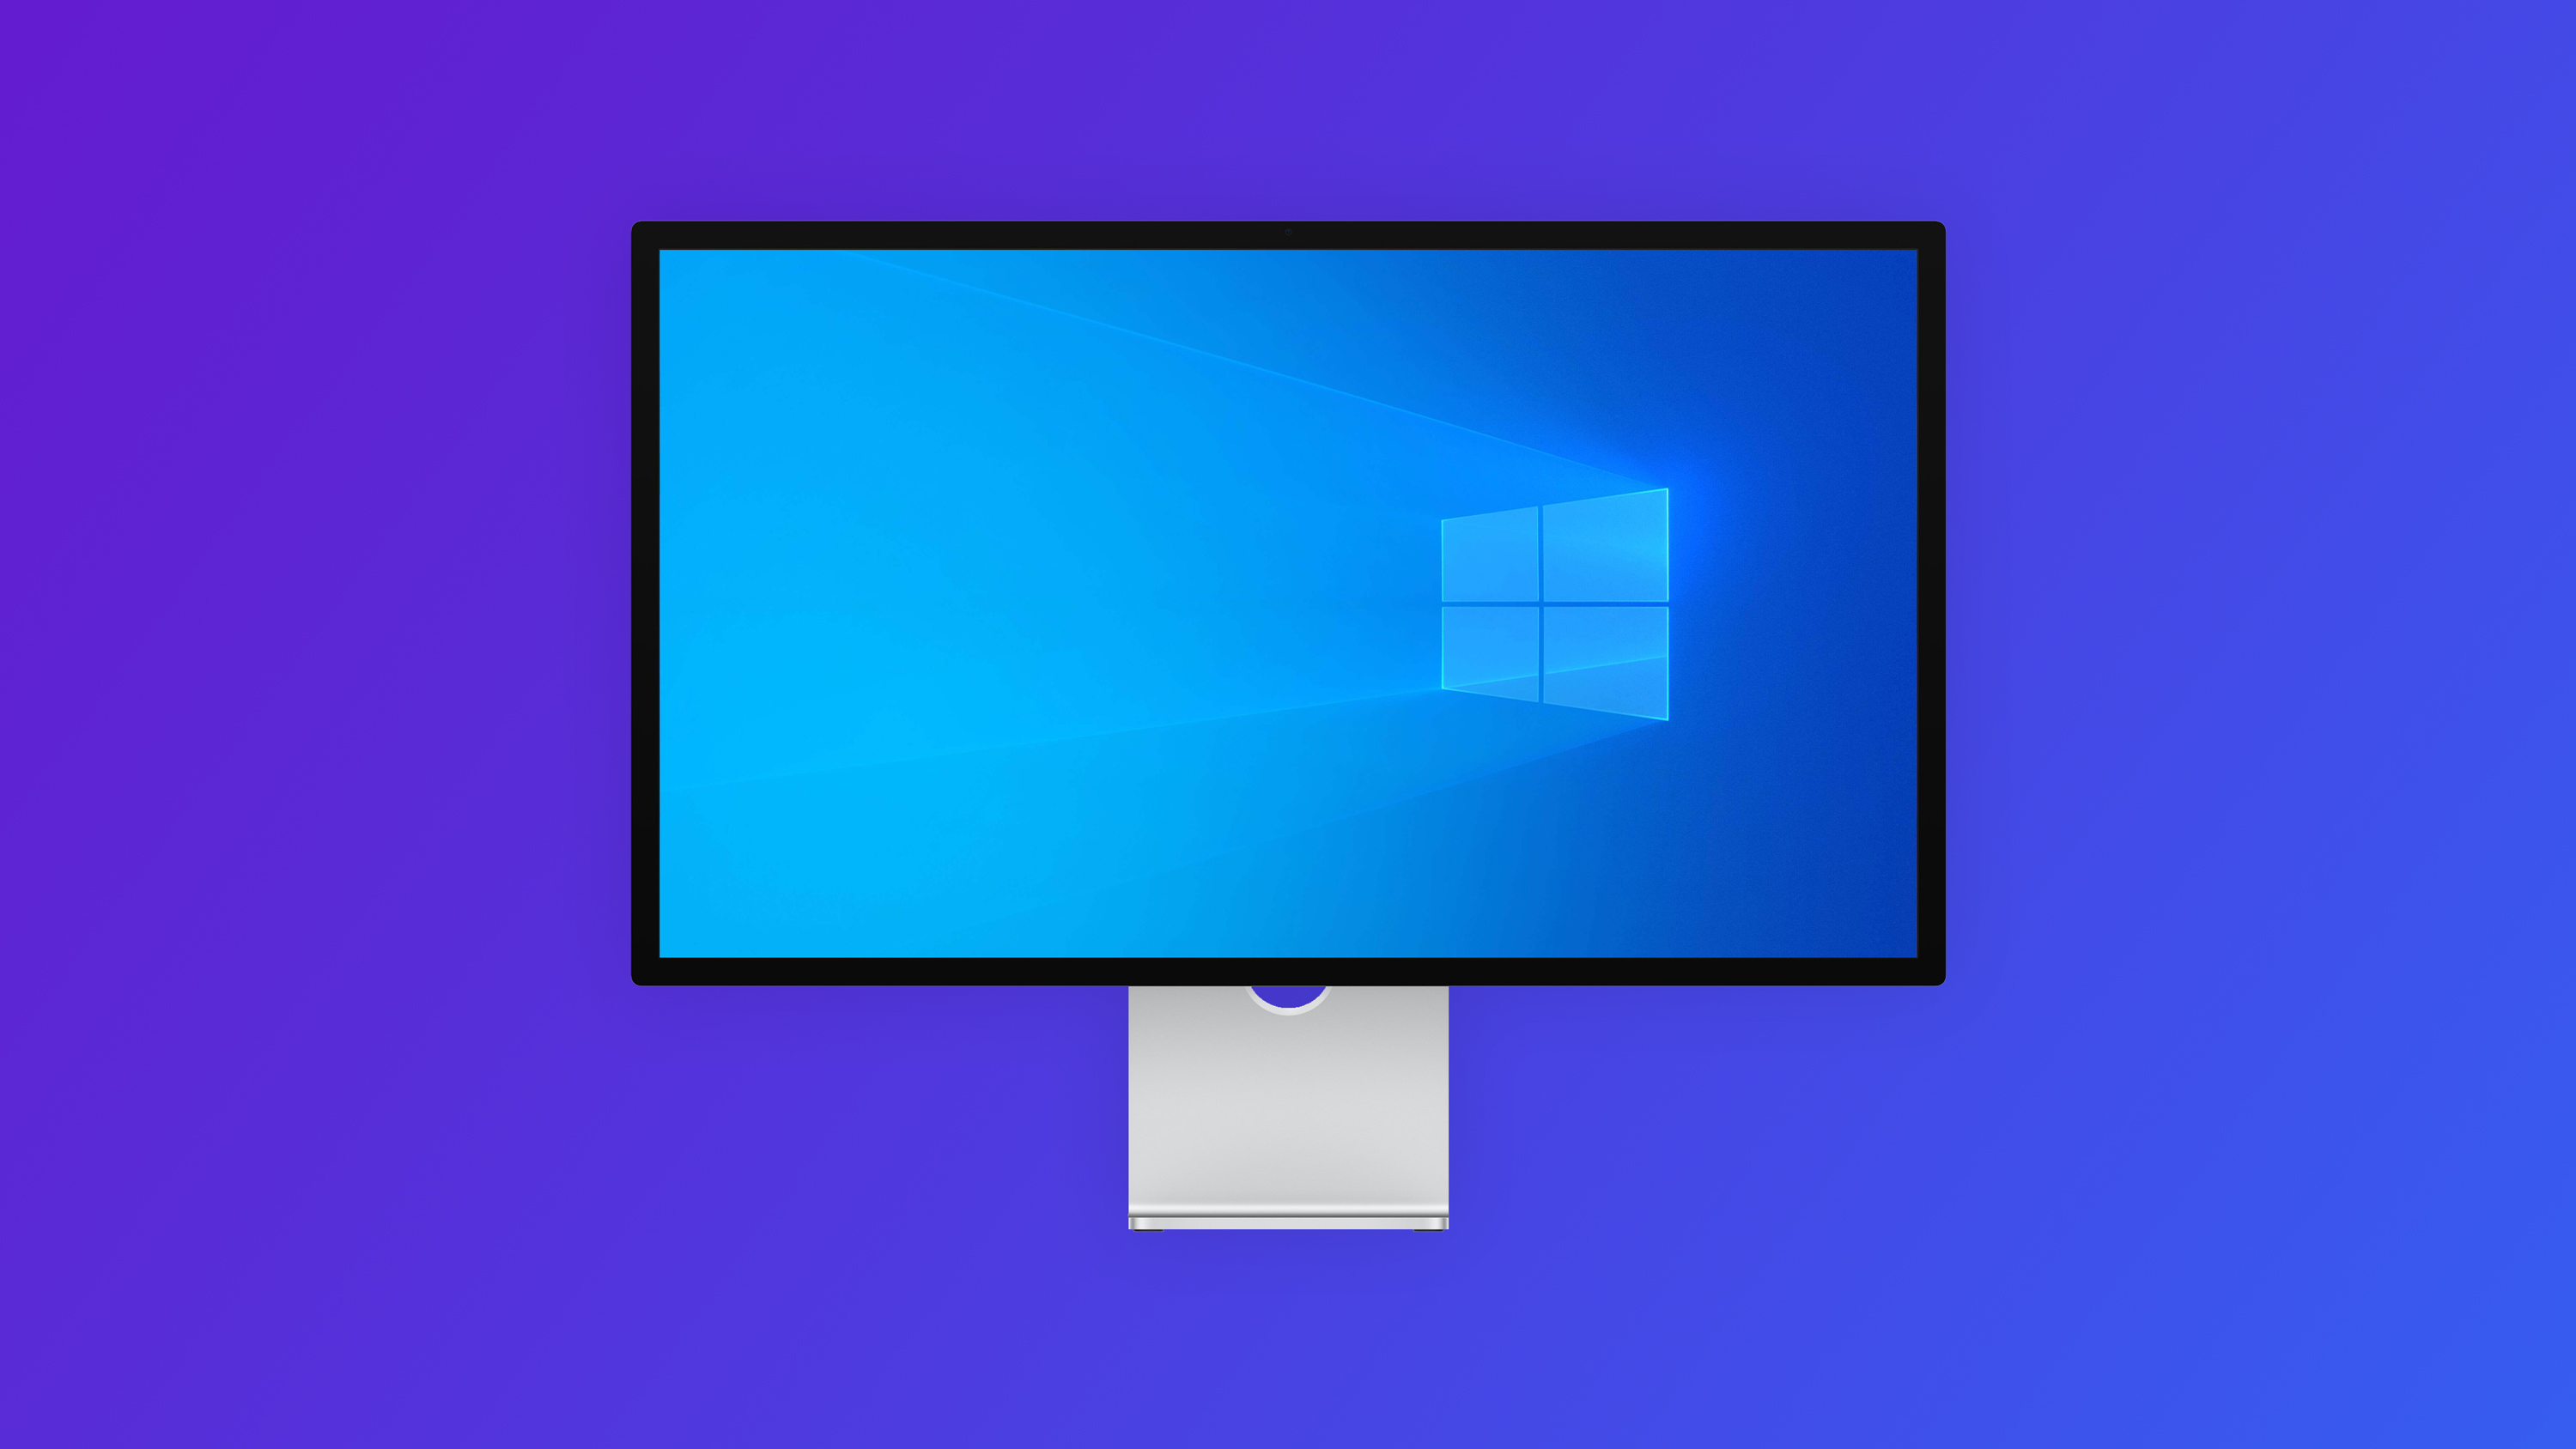 Apple Studio Display works with Windows - 9to5Mac